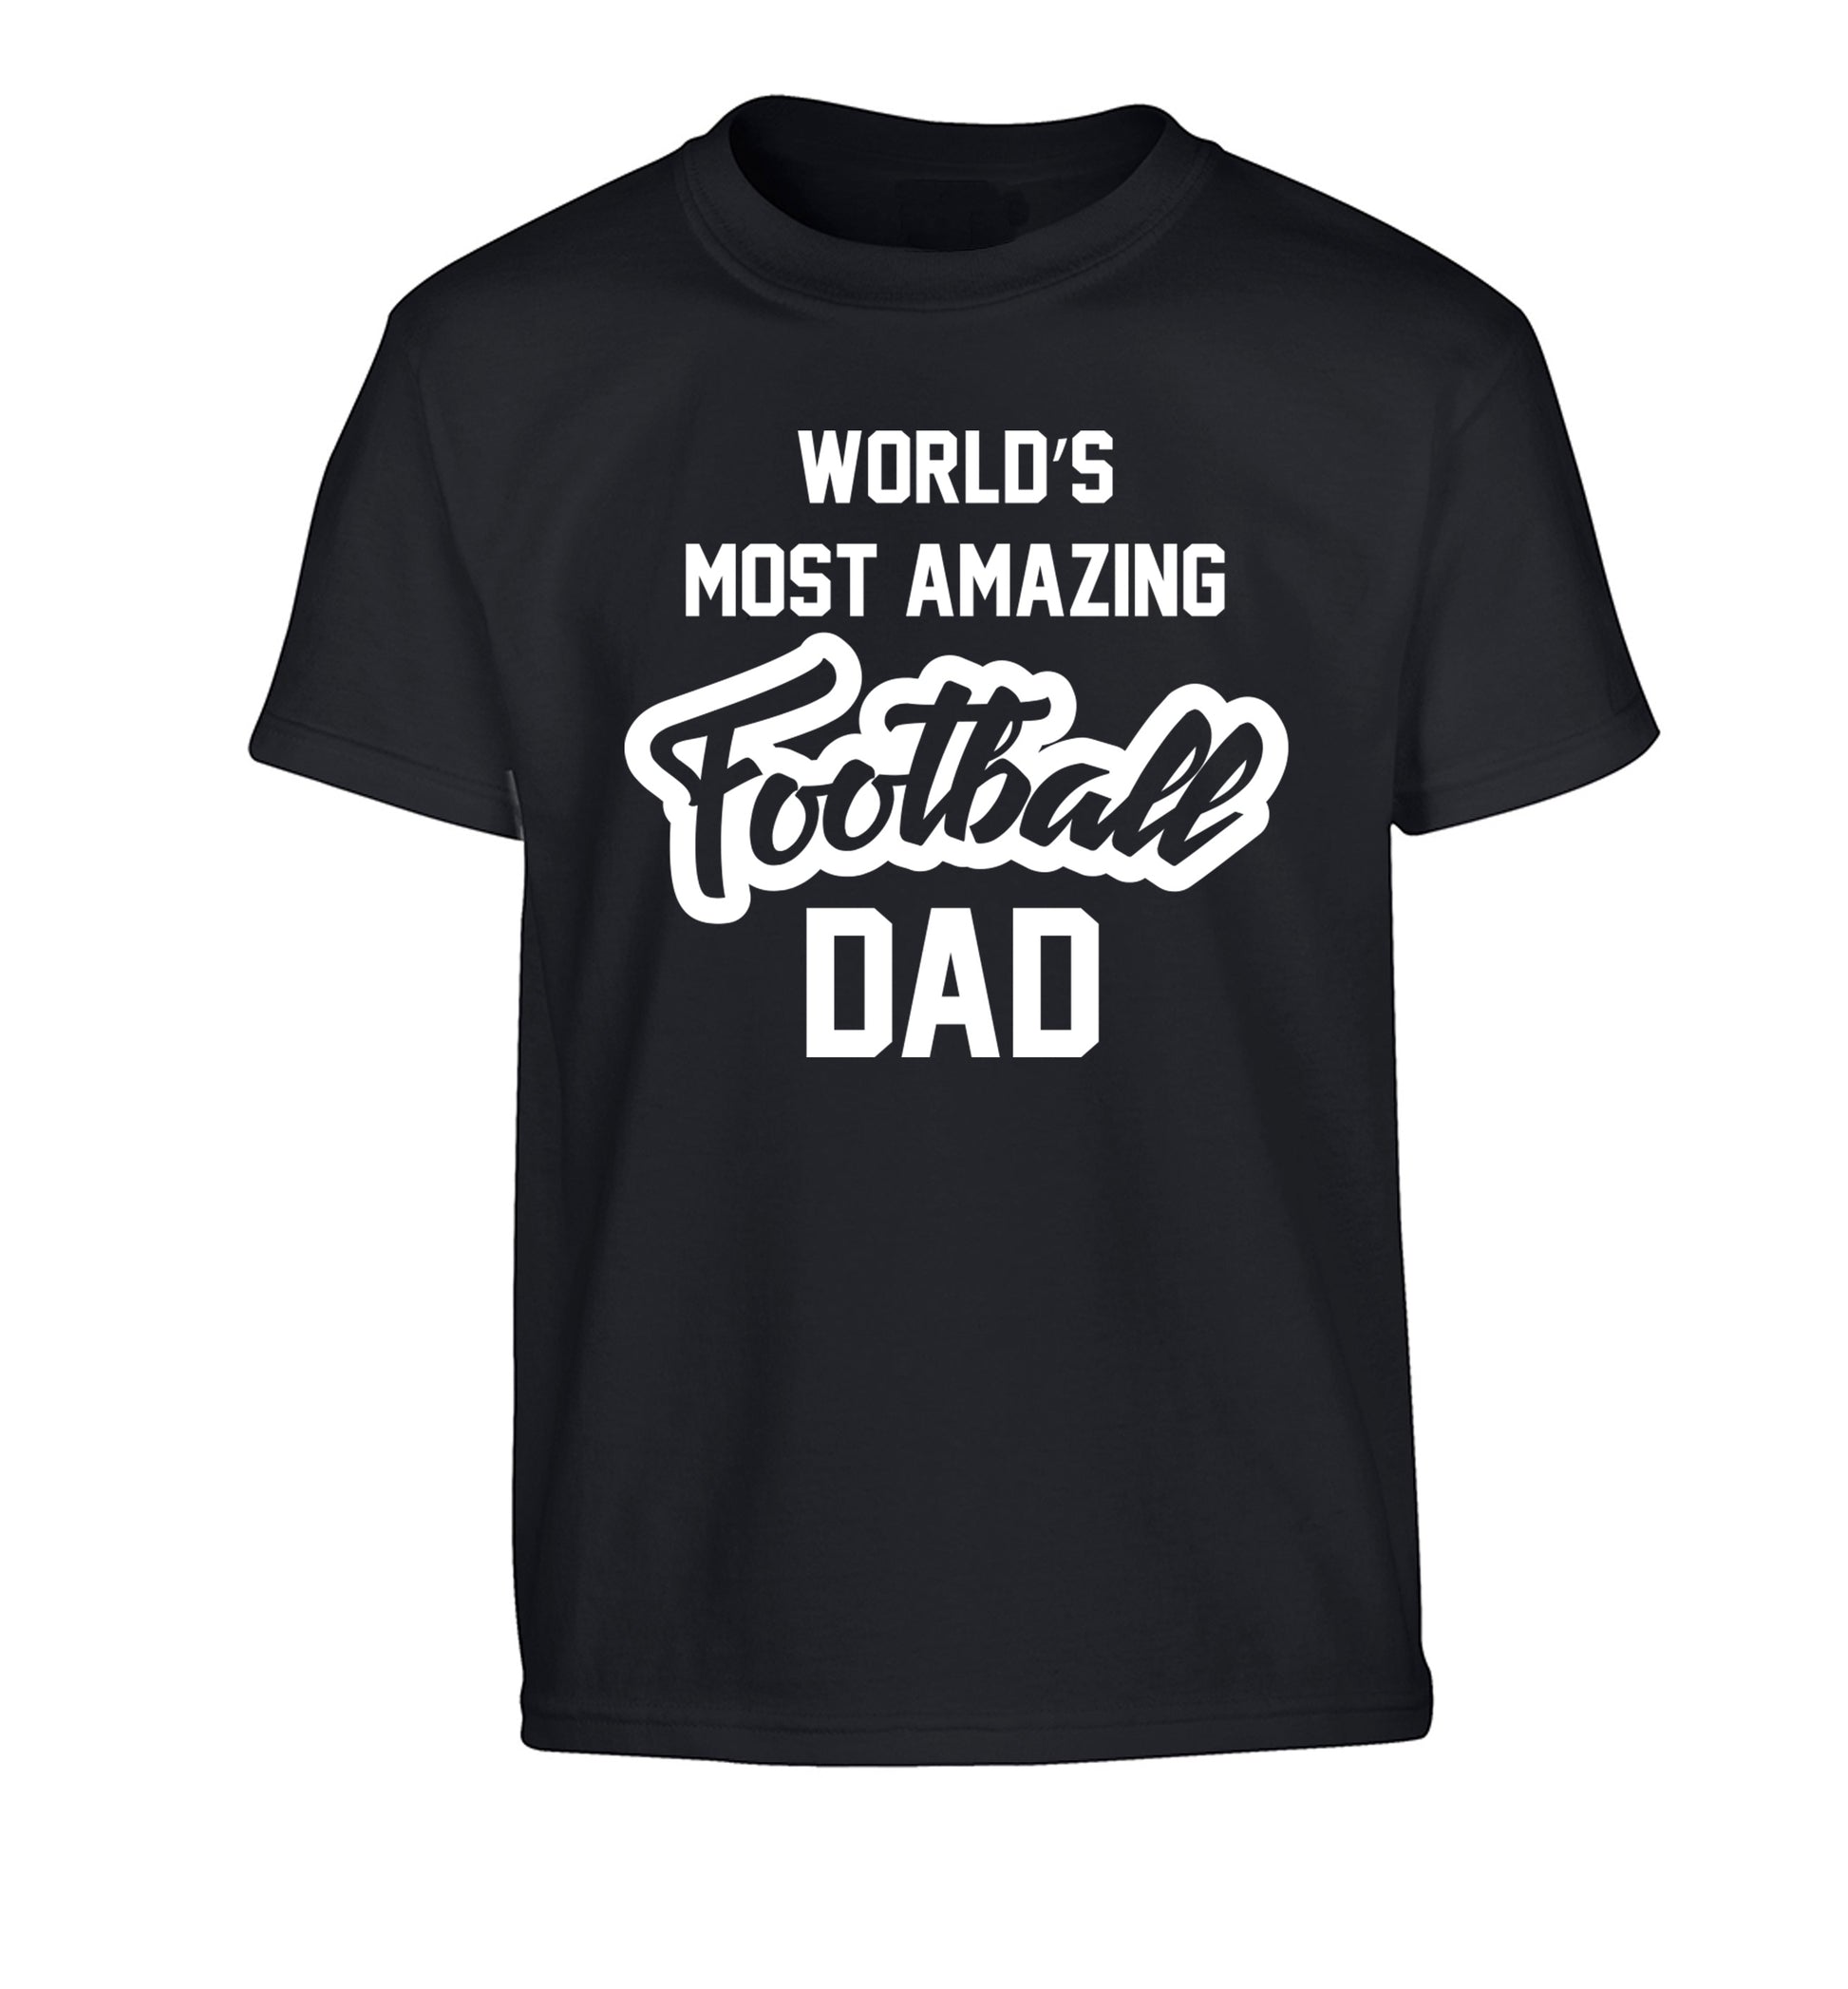 Worlds most amazing football dad Children's black Tshirt 12-14 Years